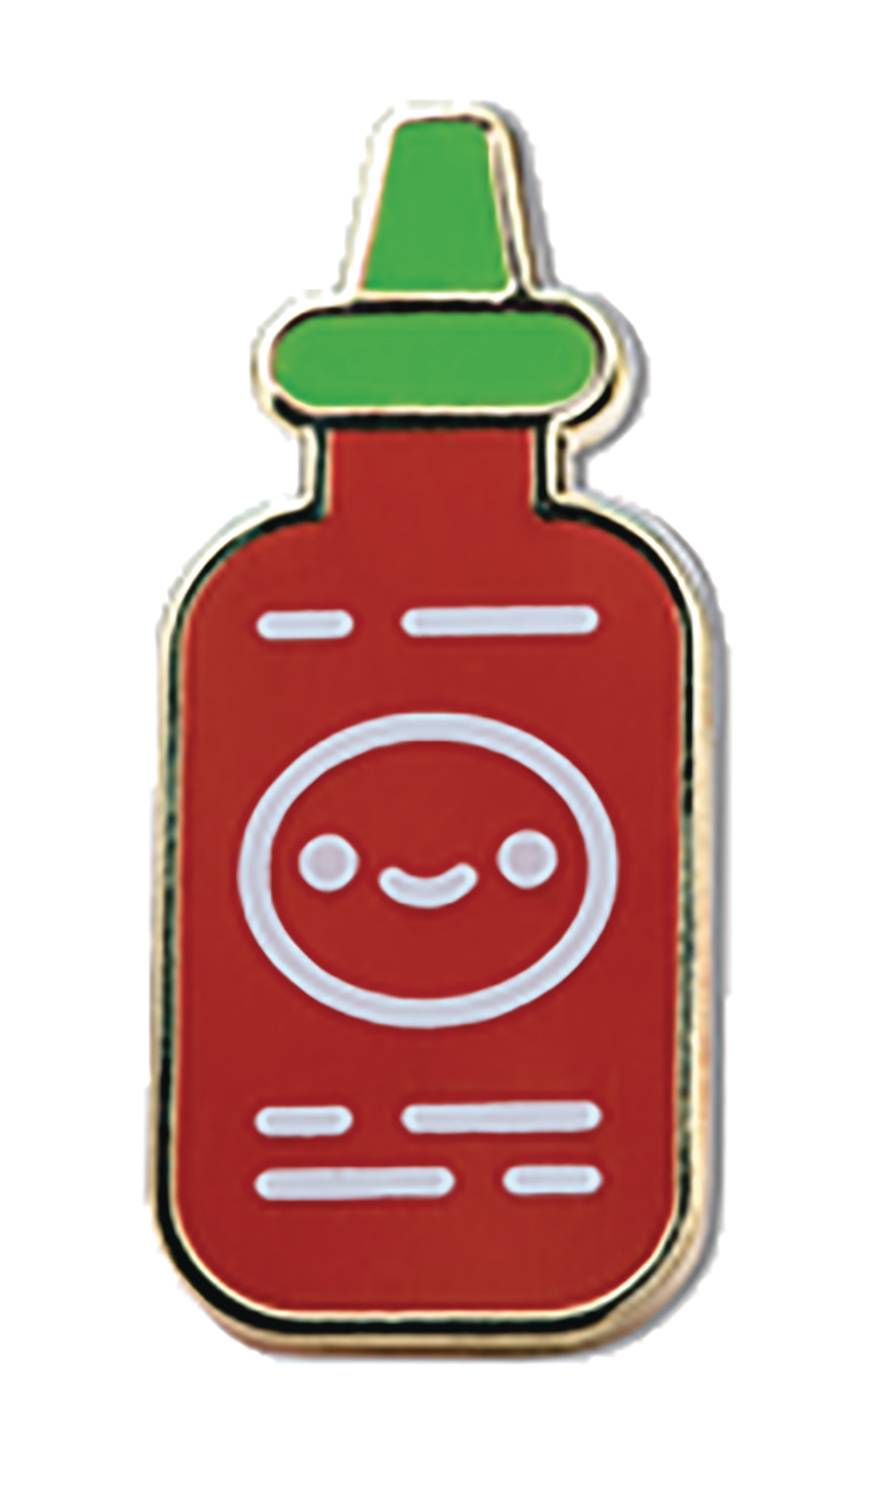 Sriracha Friend Enamel Pin